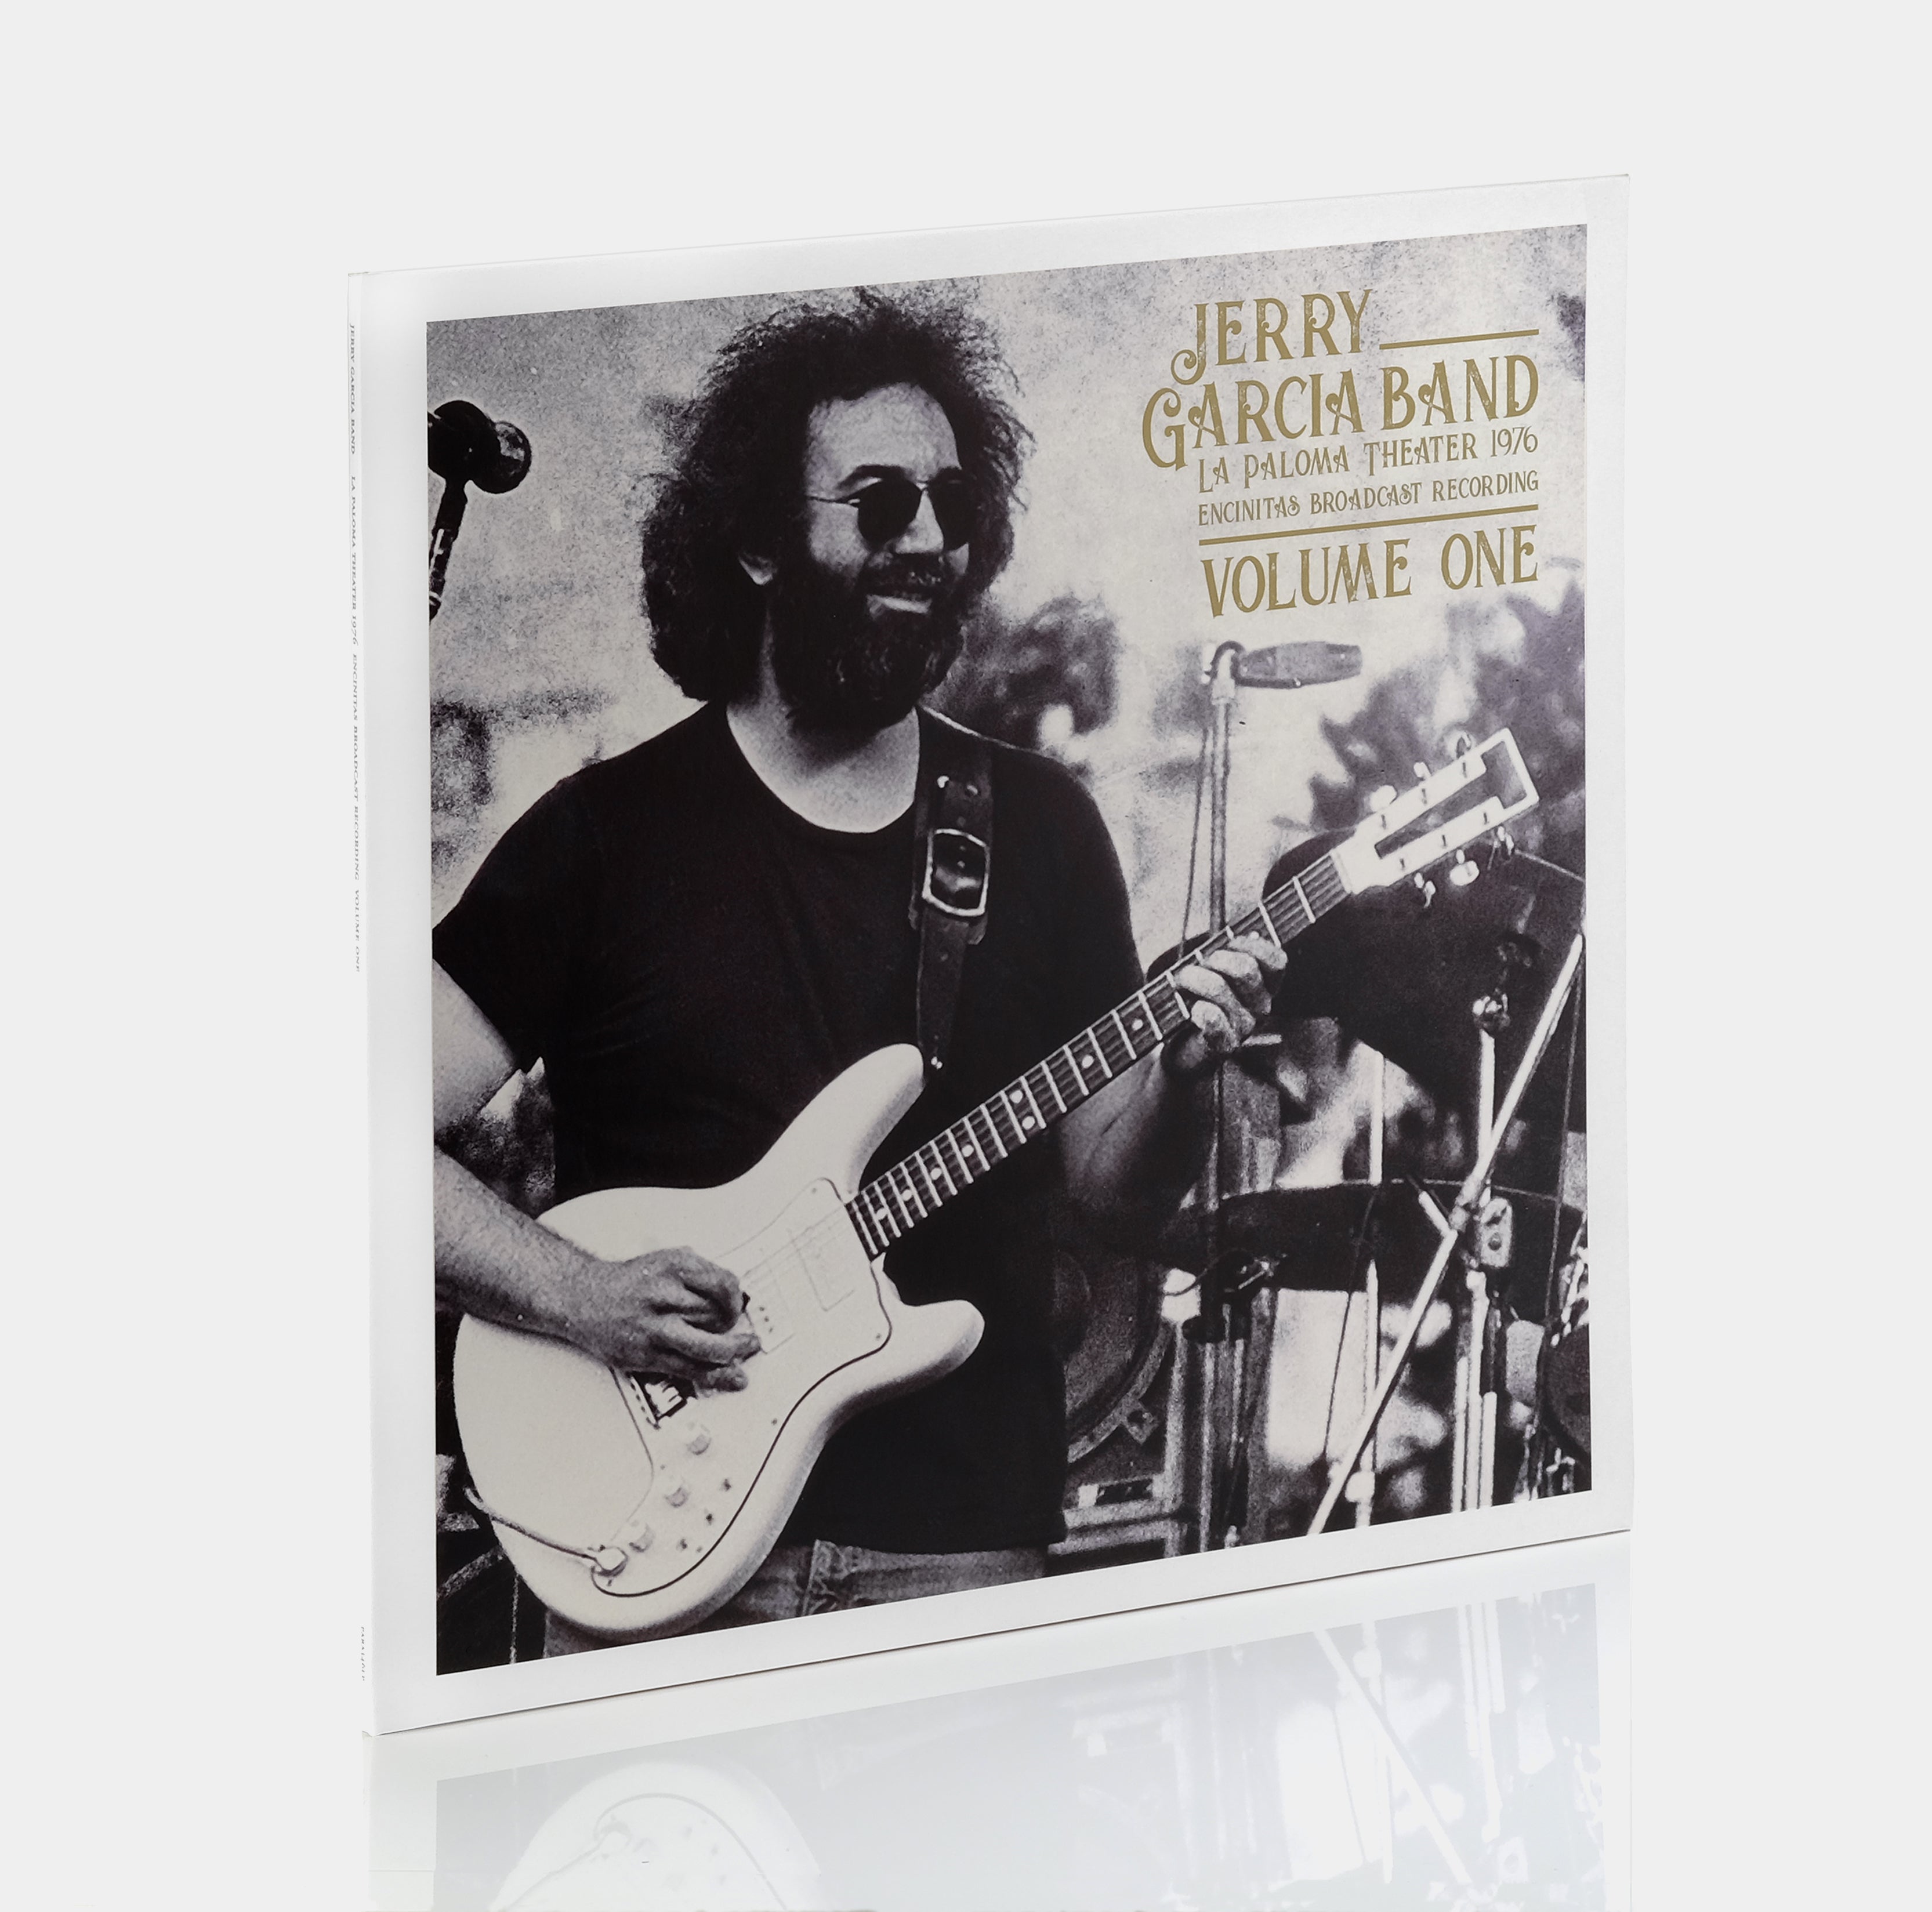 Jerry Garcia Band - La Paloma Theater 1976 Encinitas Broadcast Recording Volume One 2xLP Vinyl Record